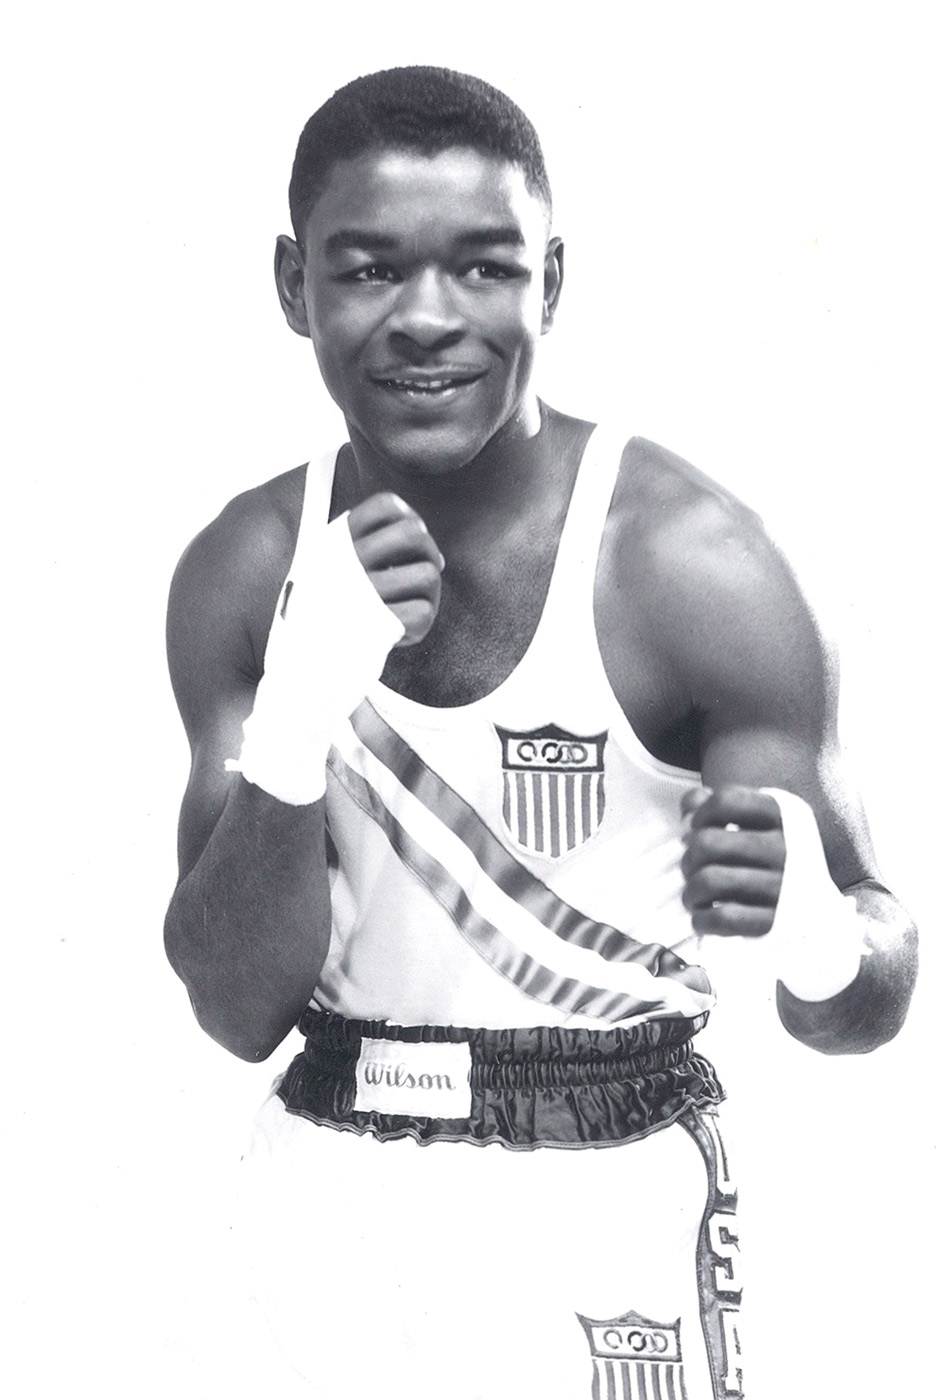 Chuck Adkins, Boxing, 1952 Olympics